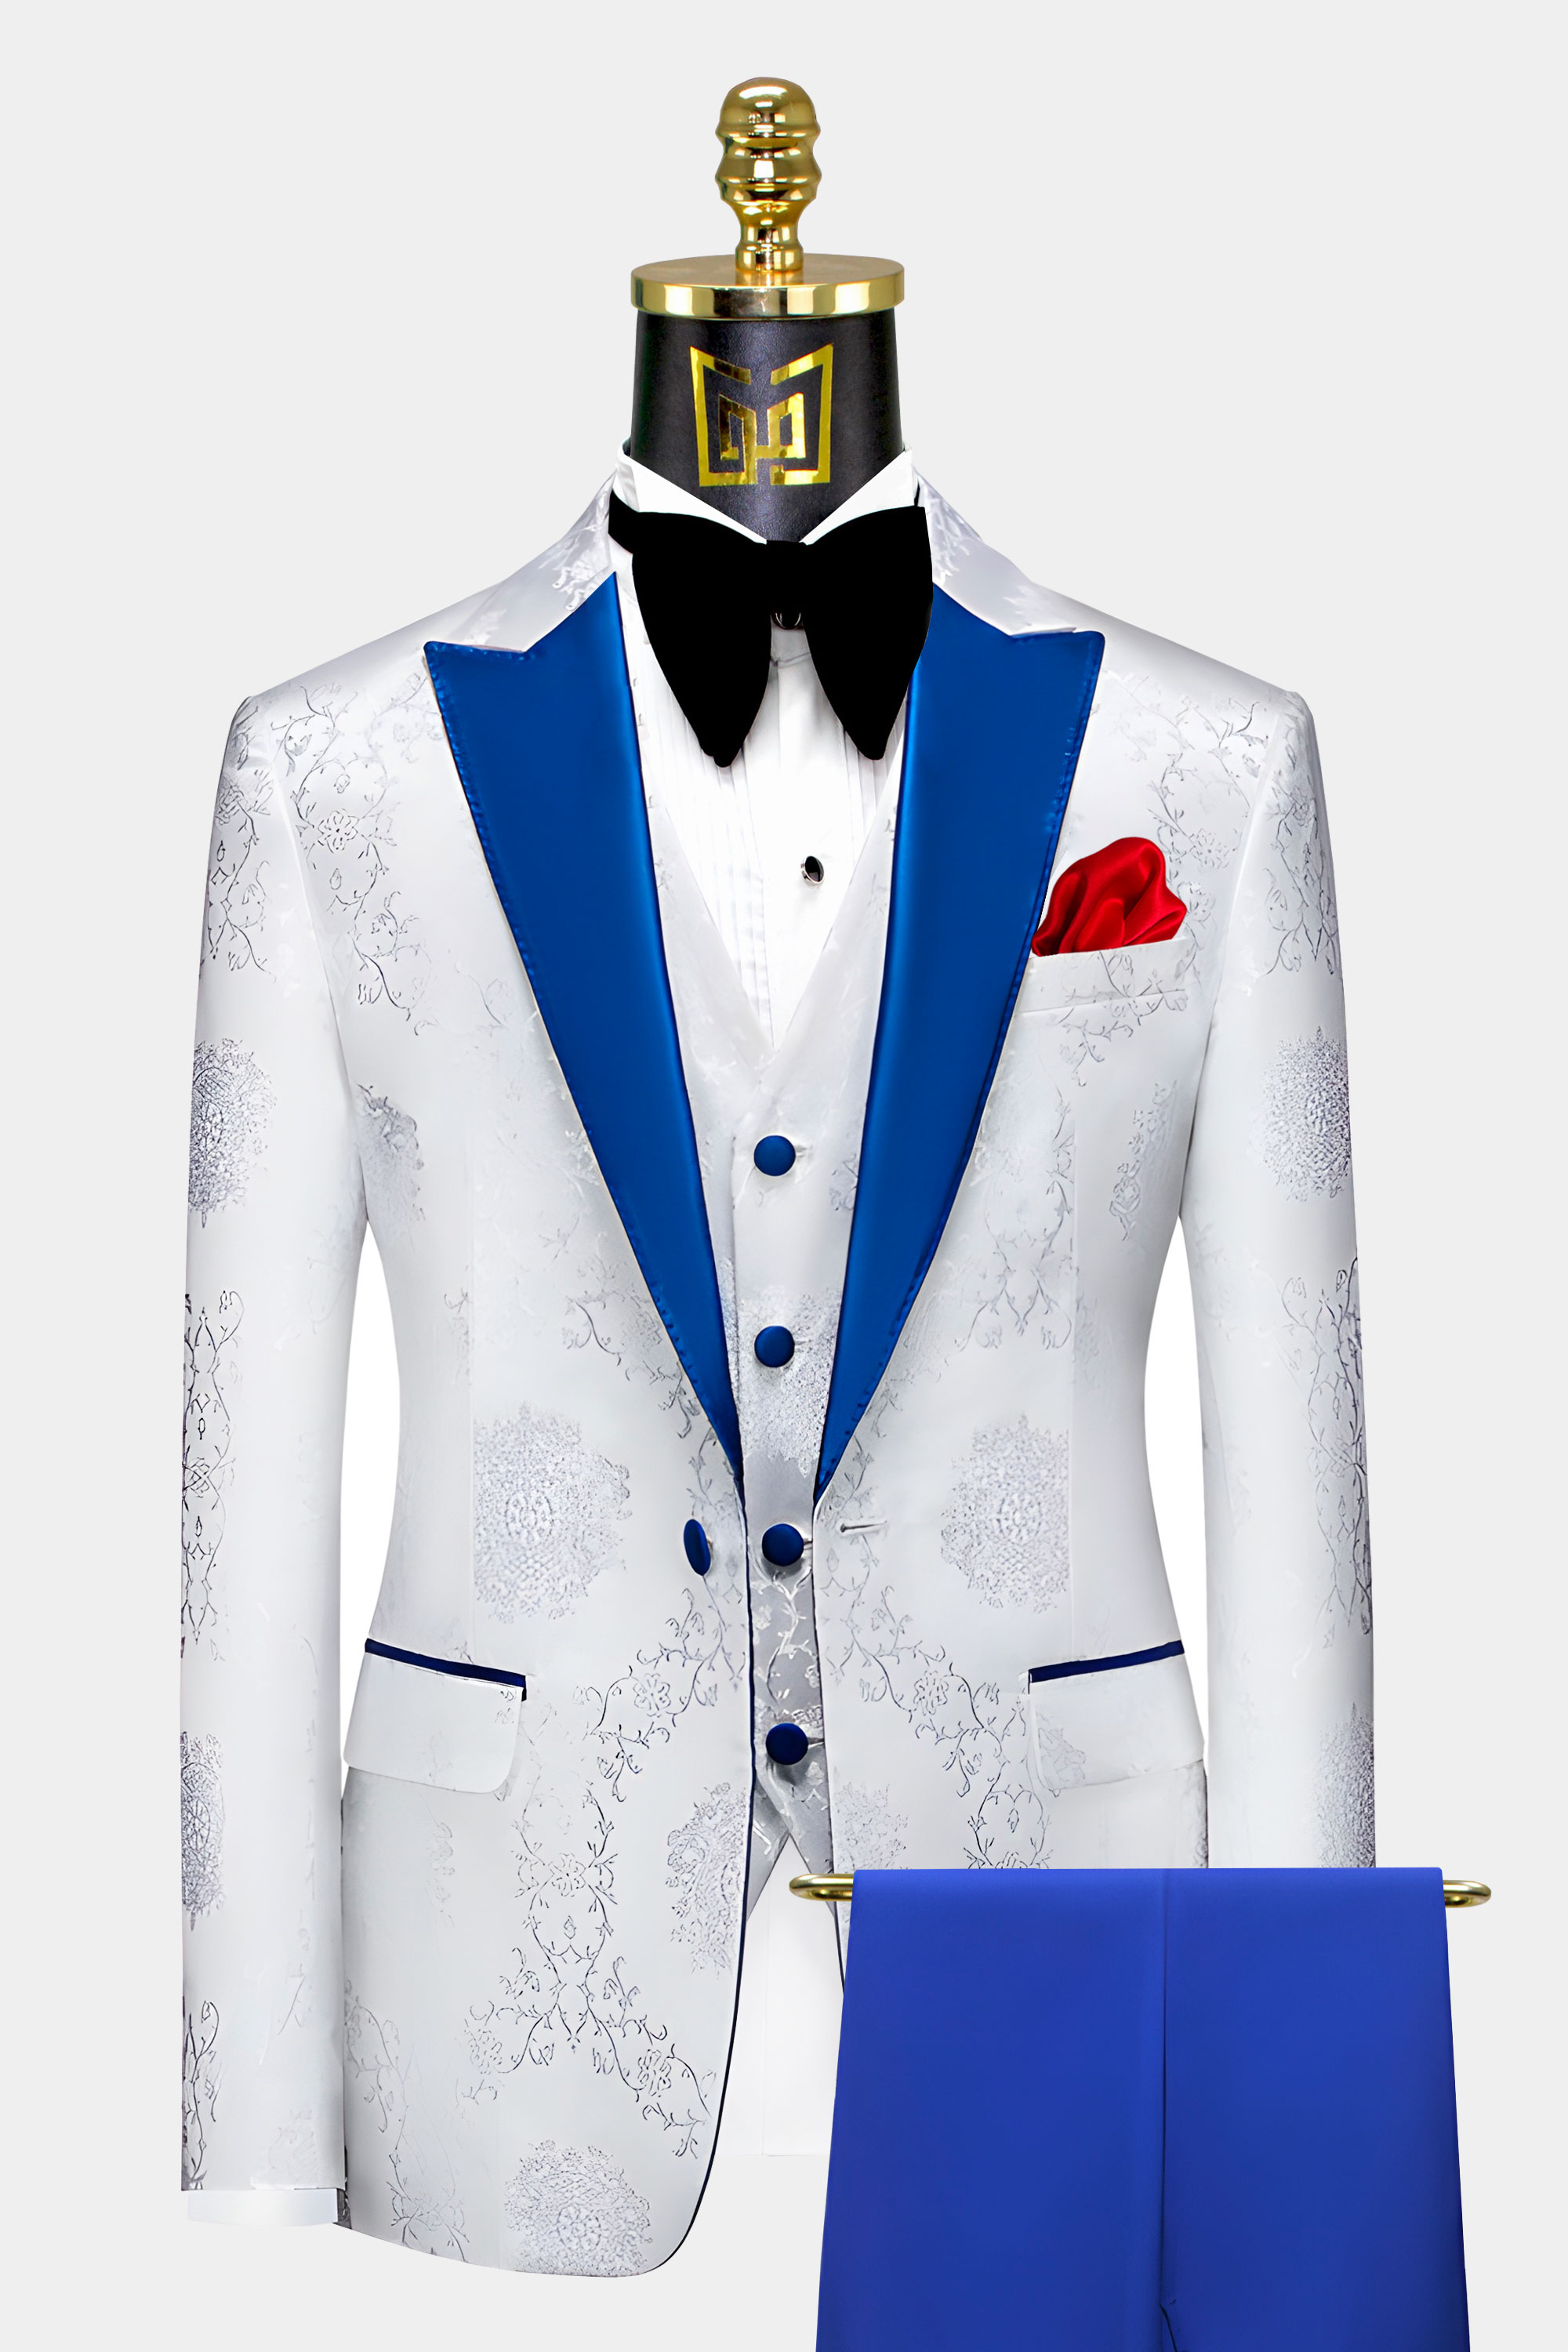 Royal Blue and White Tuxedo - 3 Piece | Gentleman's Guru